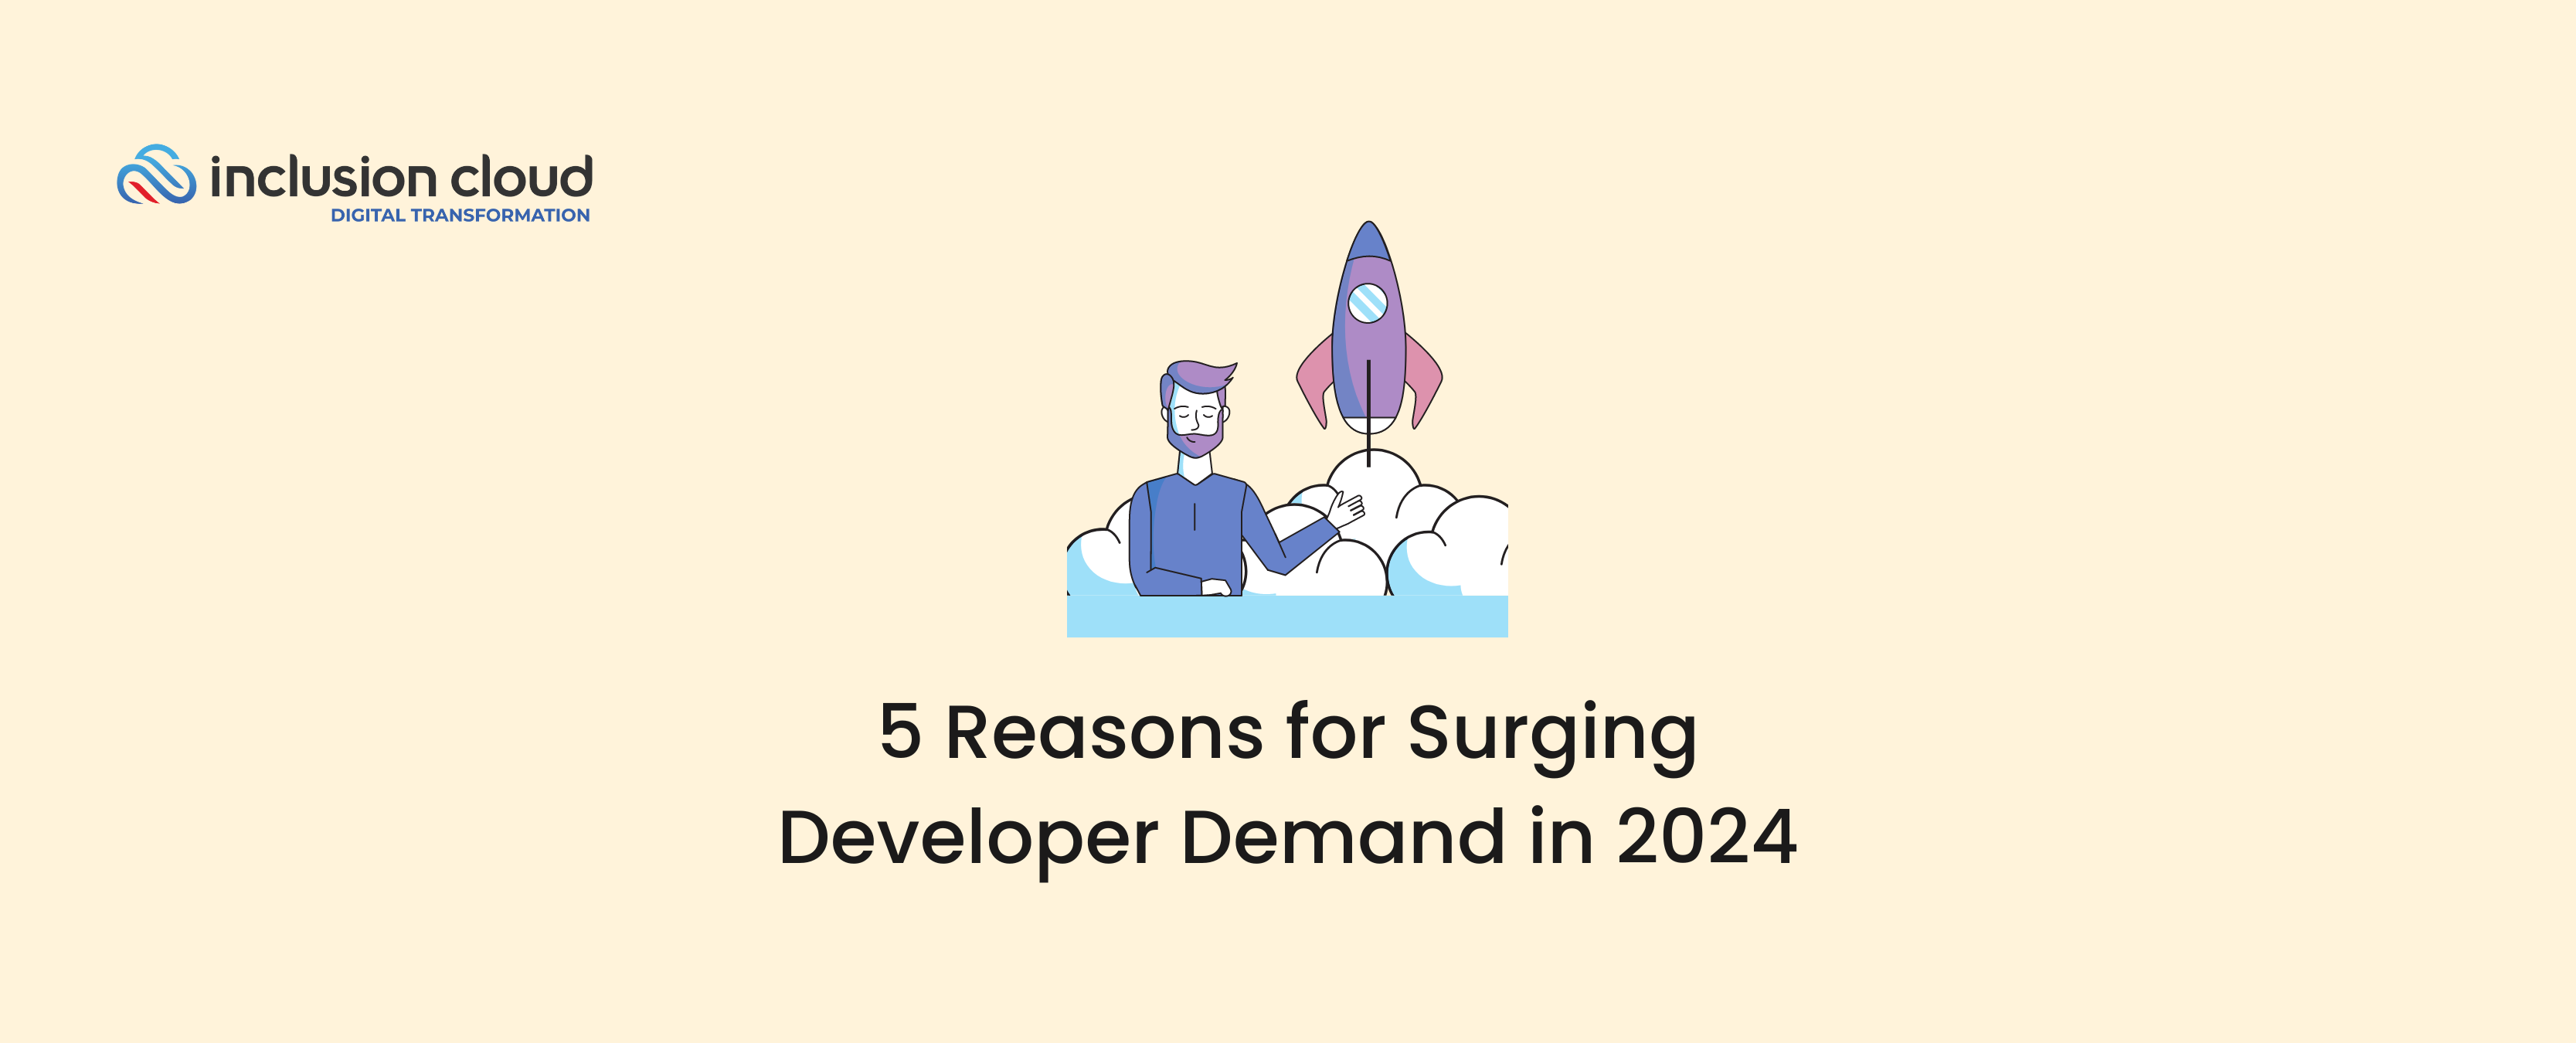 5 Reasons for Surging Developer Demand in 2024